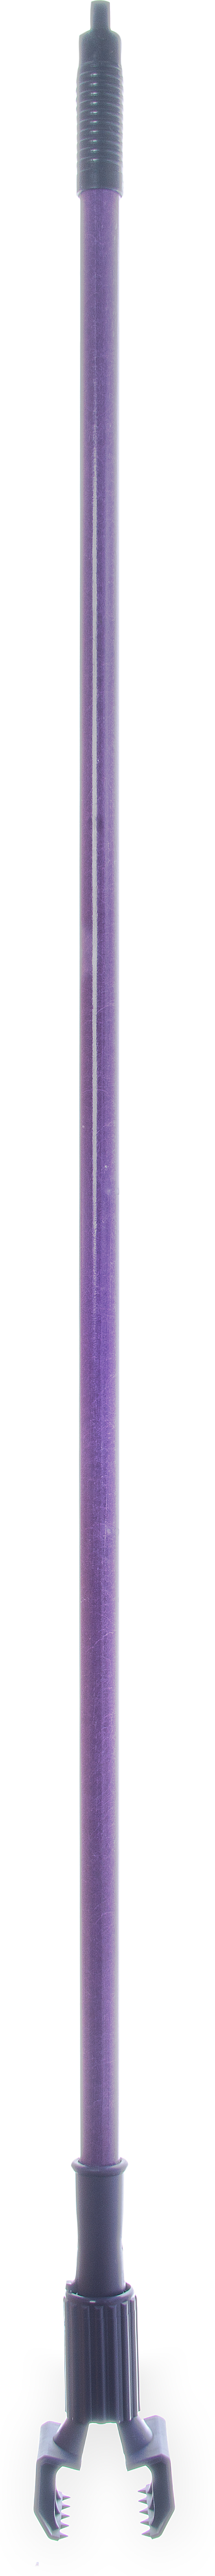 Jaw Style Mop Handle 60 - Purple